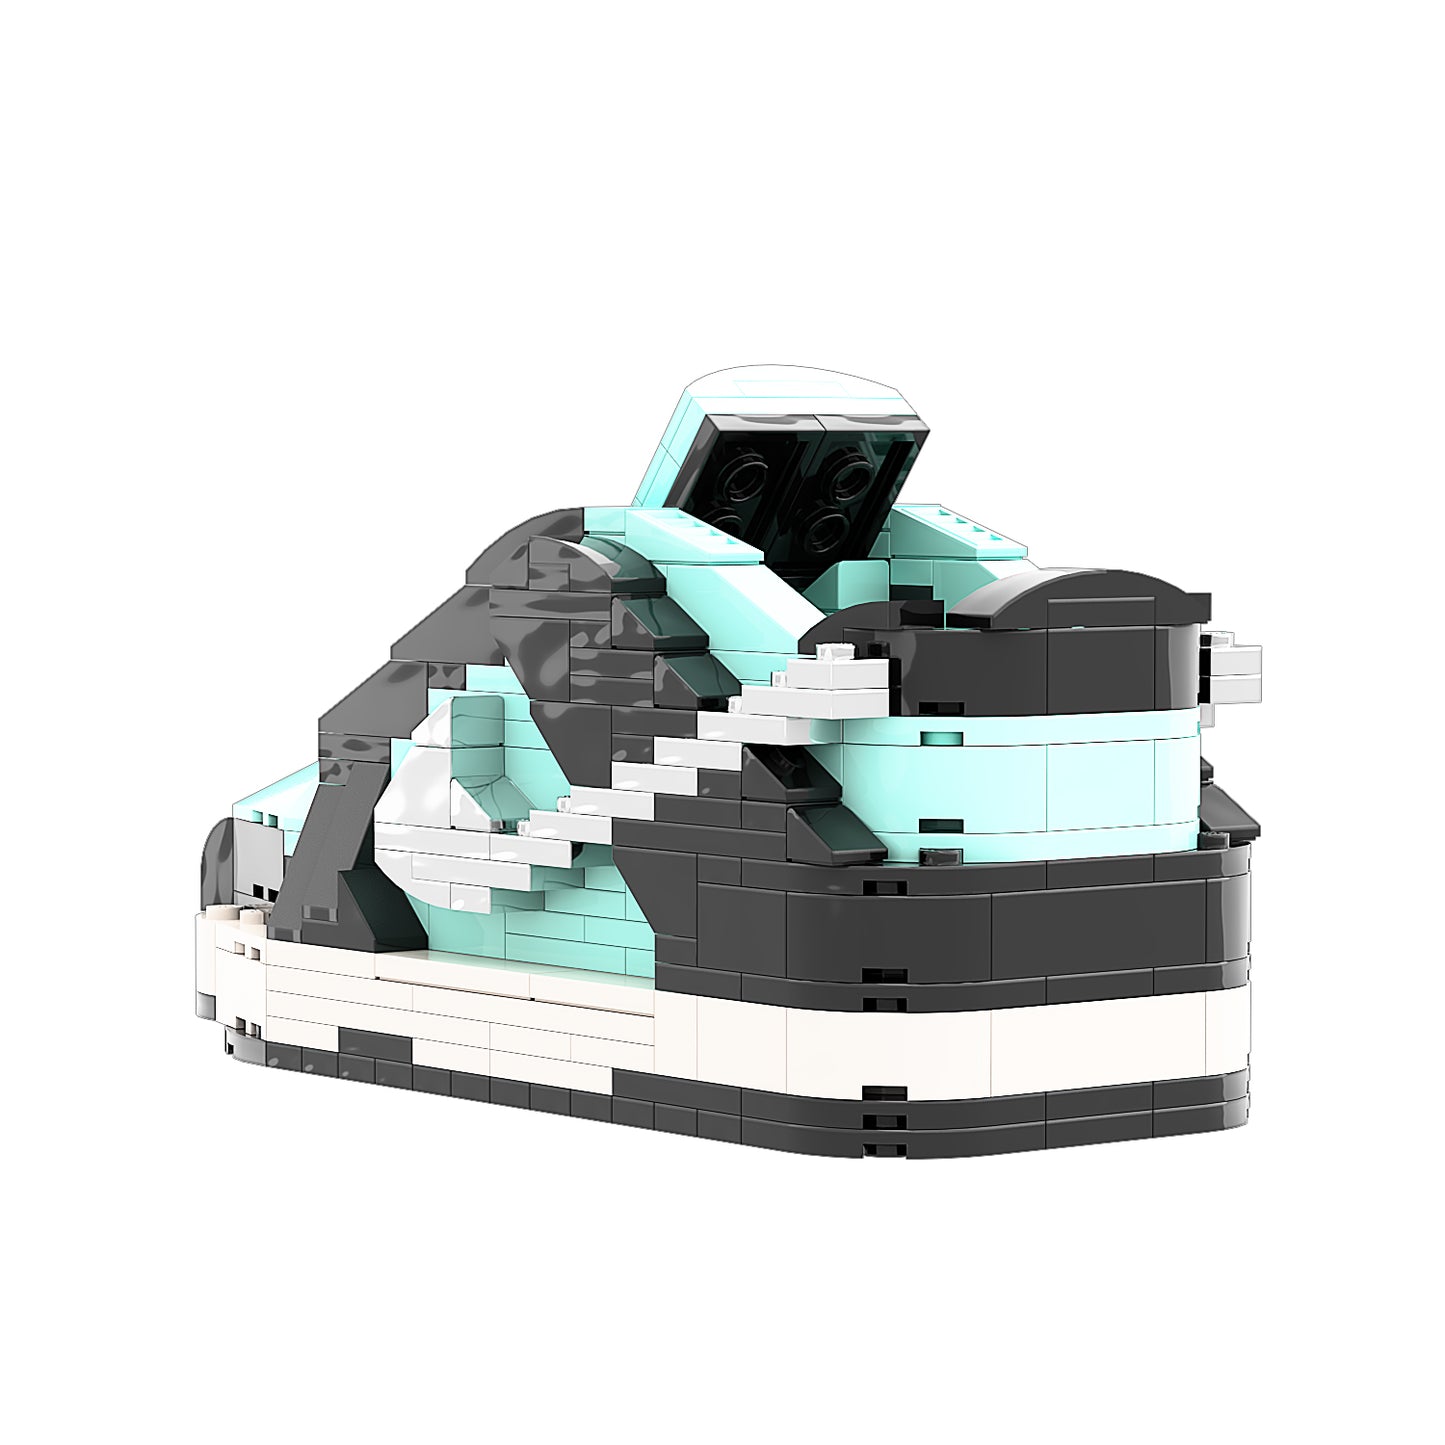 REGULAR SB Dunk "Diamond Low" Sneaker Bricks with Mini Figure